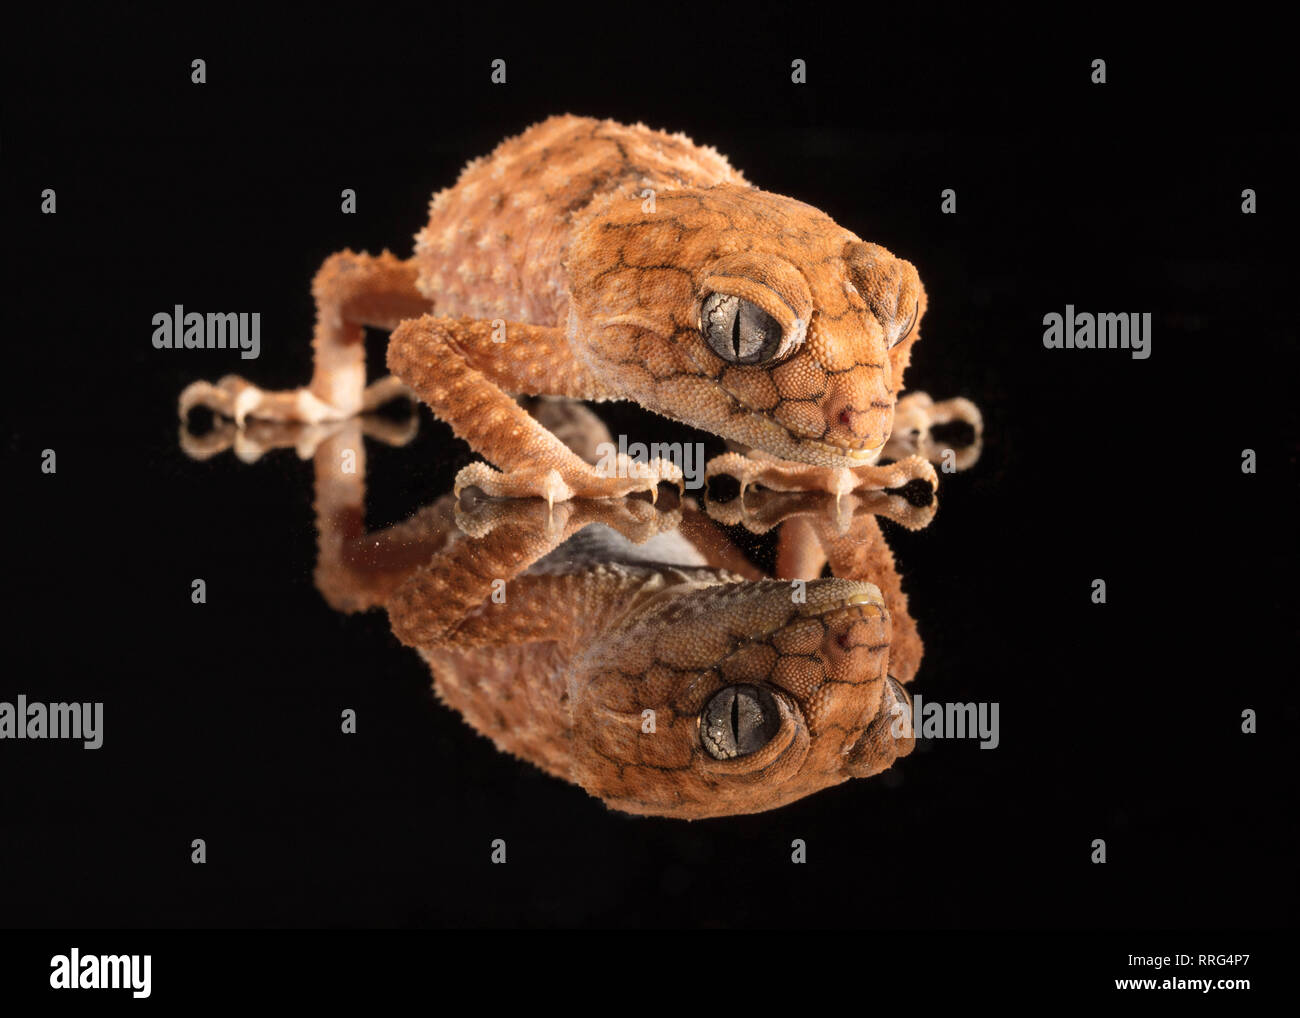 Australian Rough Knobtail Gecko with reflection Stock Photo